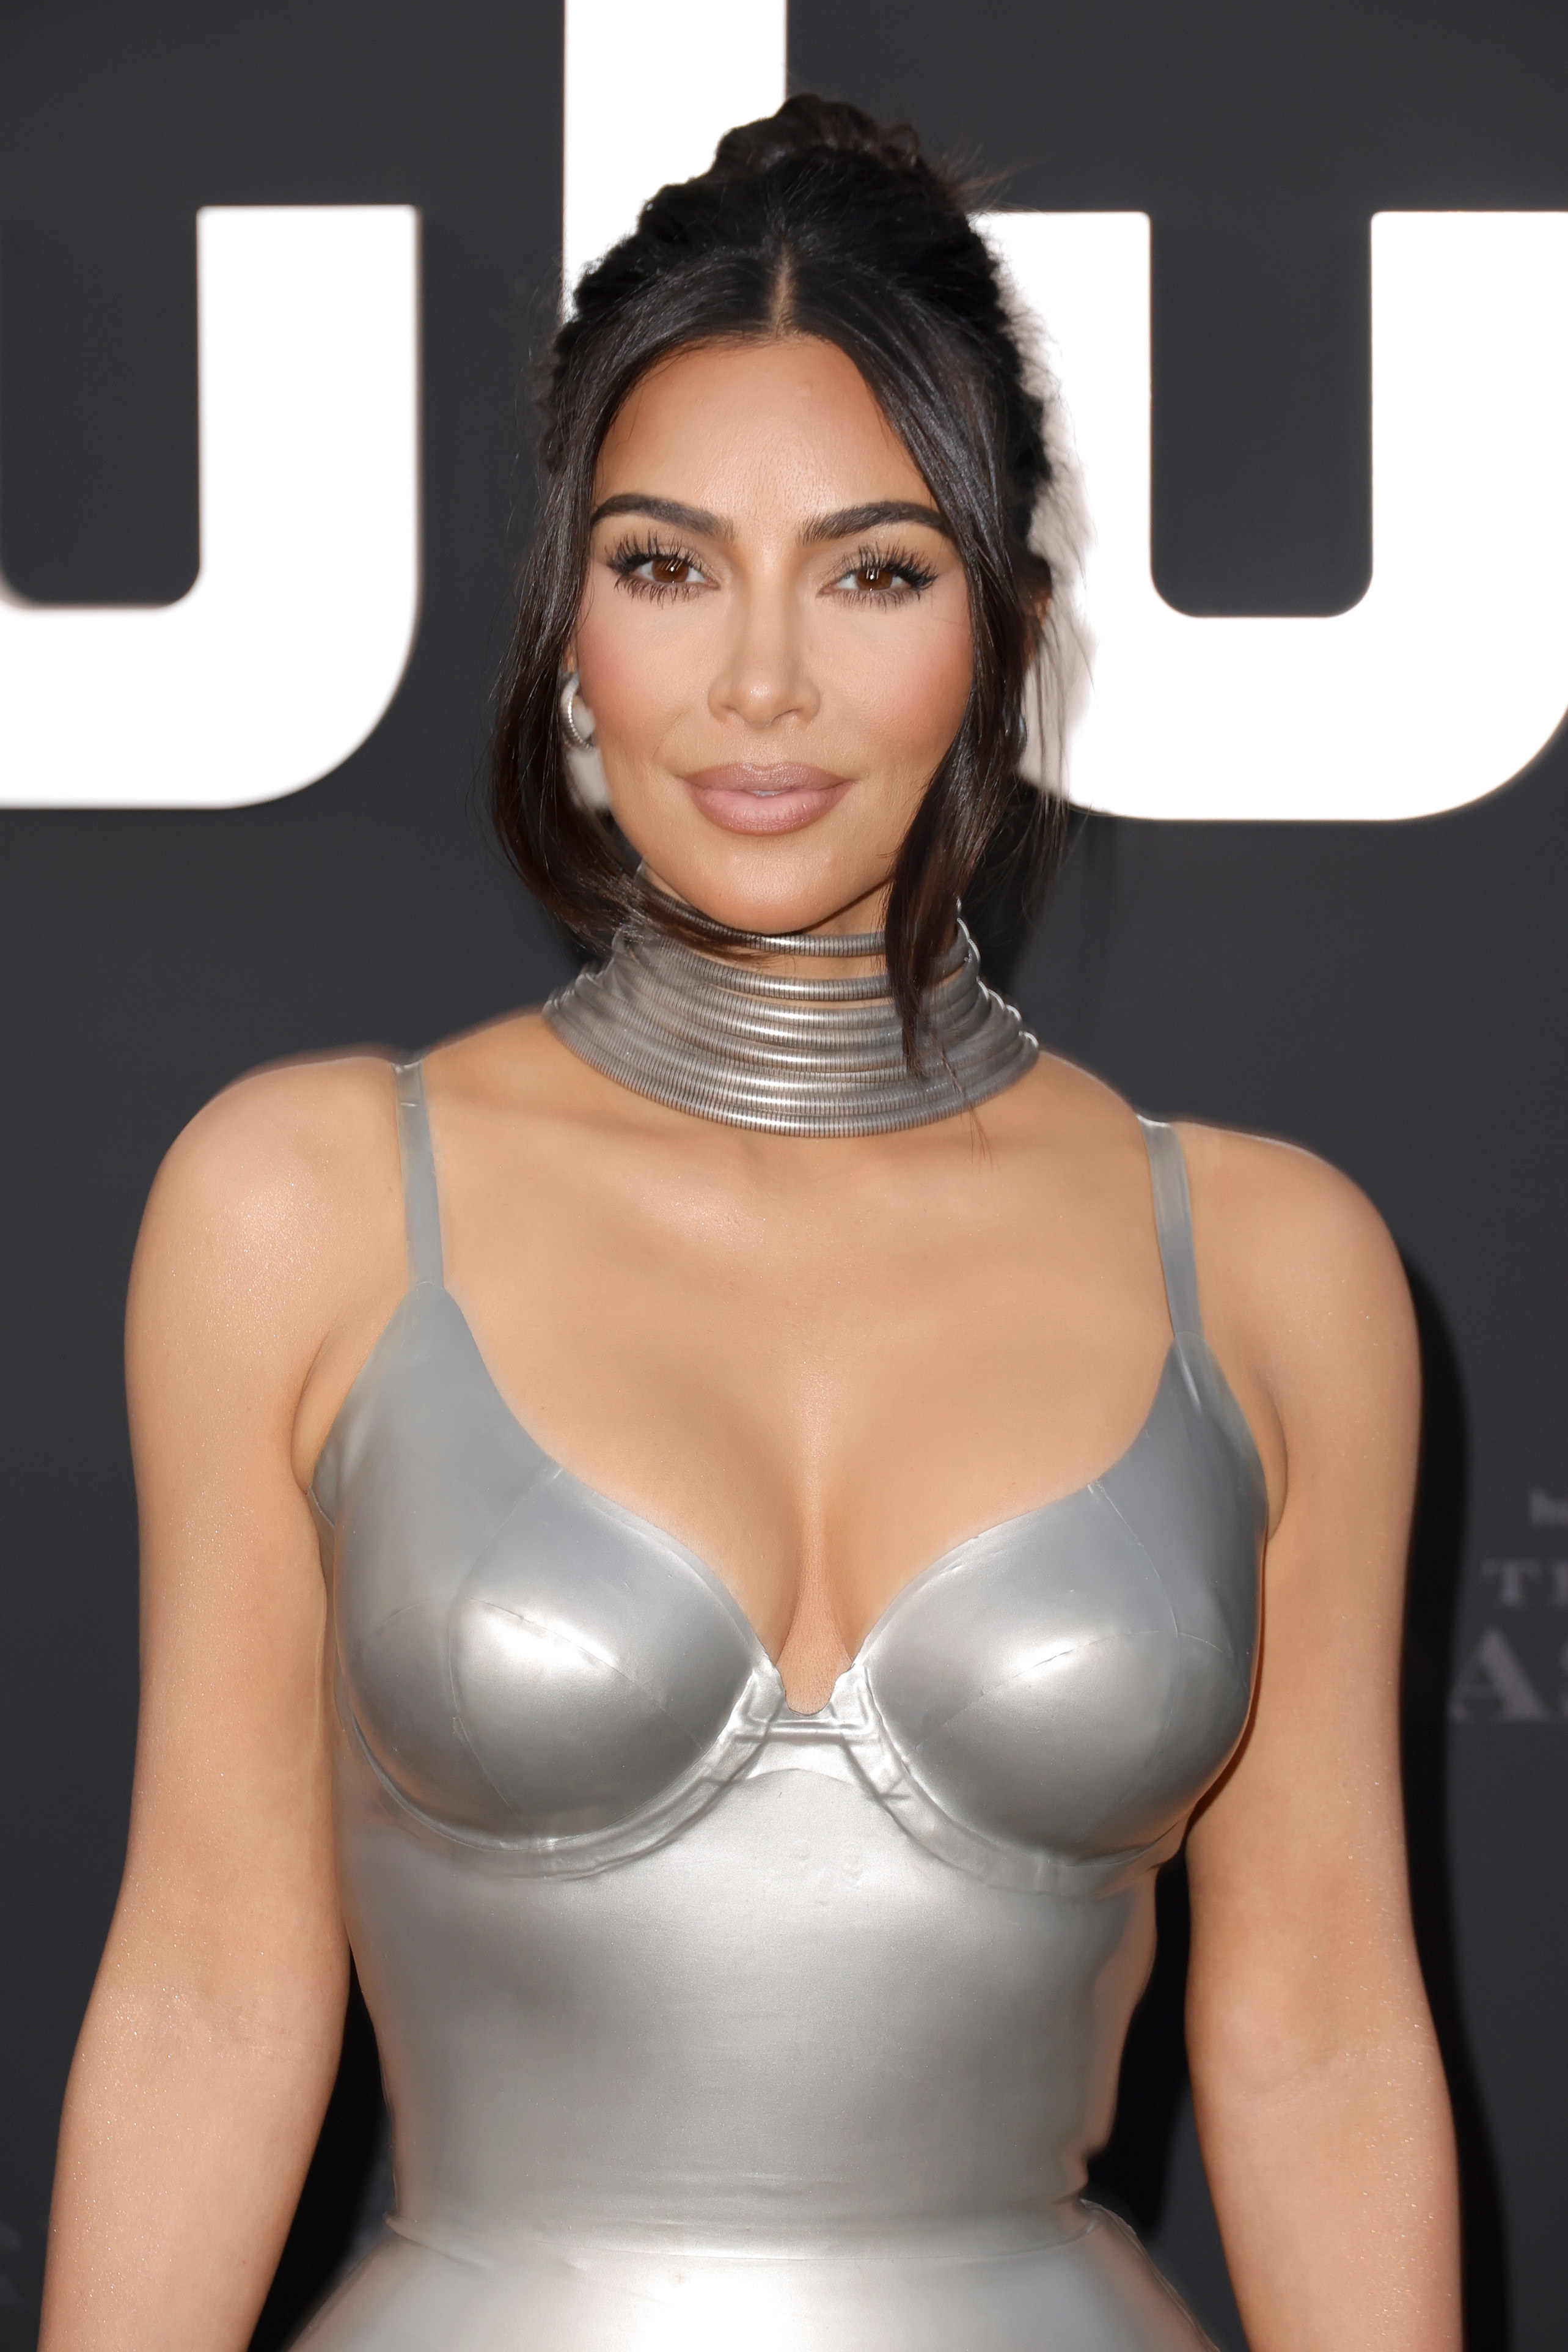 Kim Kardashian announces a wider crotch in SKIMS bodysuit for